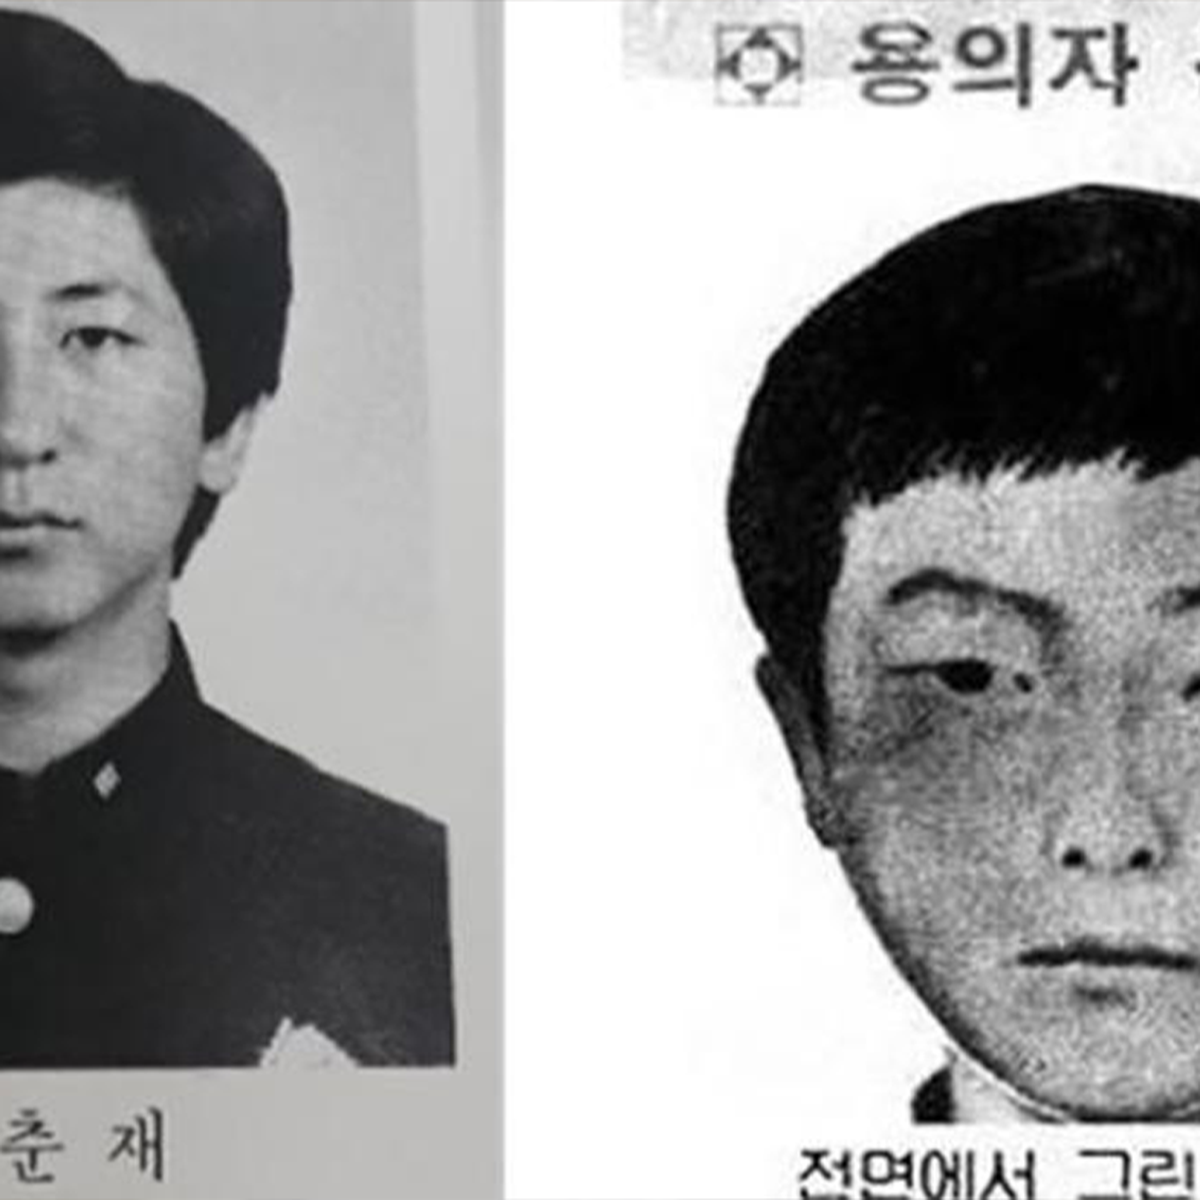 Lee Chunjae: Man who confessed to being notorious serial killer 'surprised'  he wasn't caught sooner